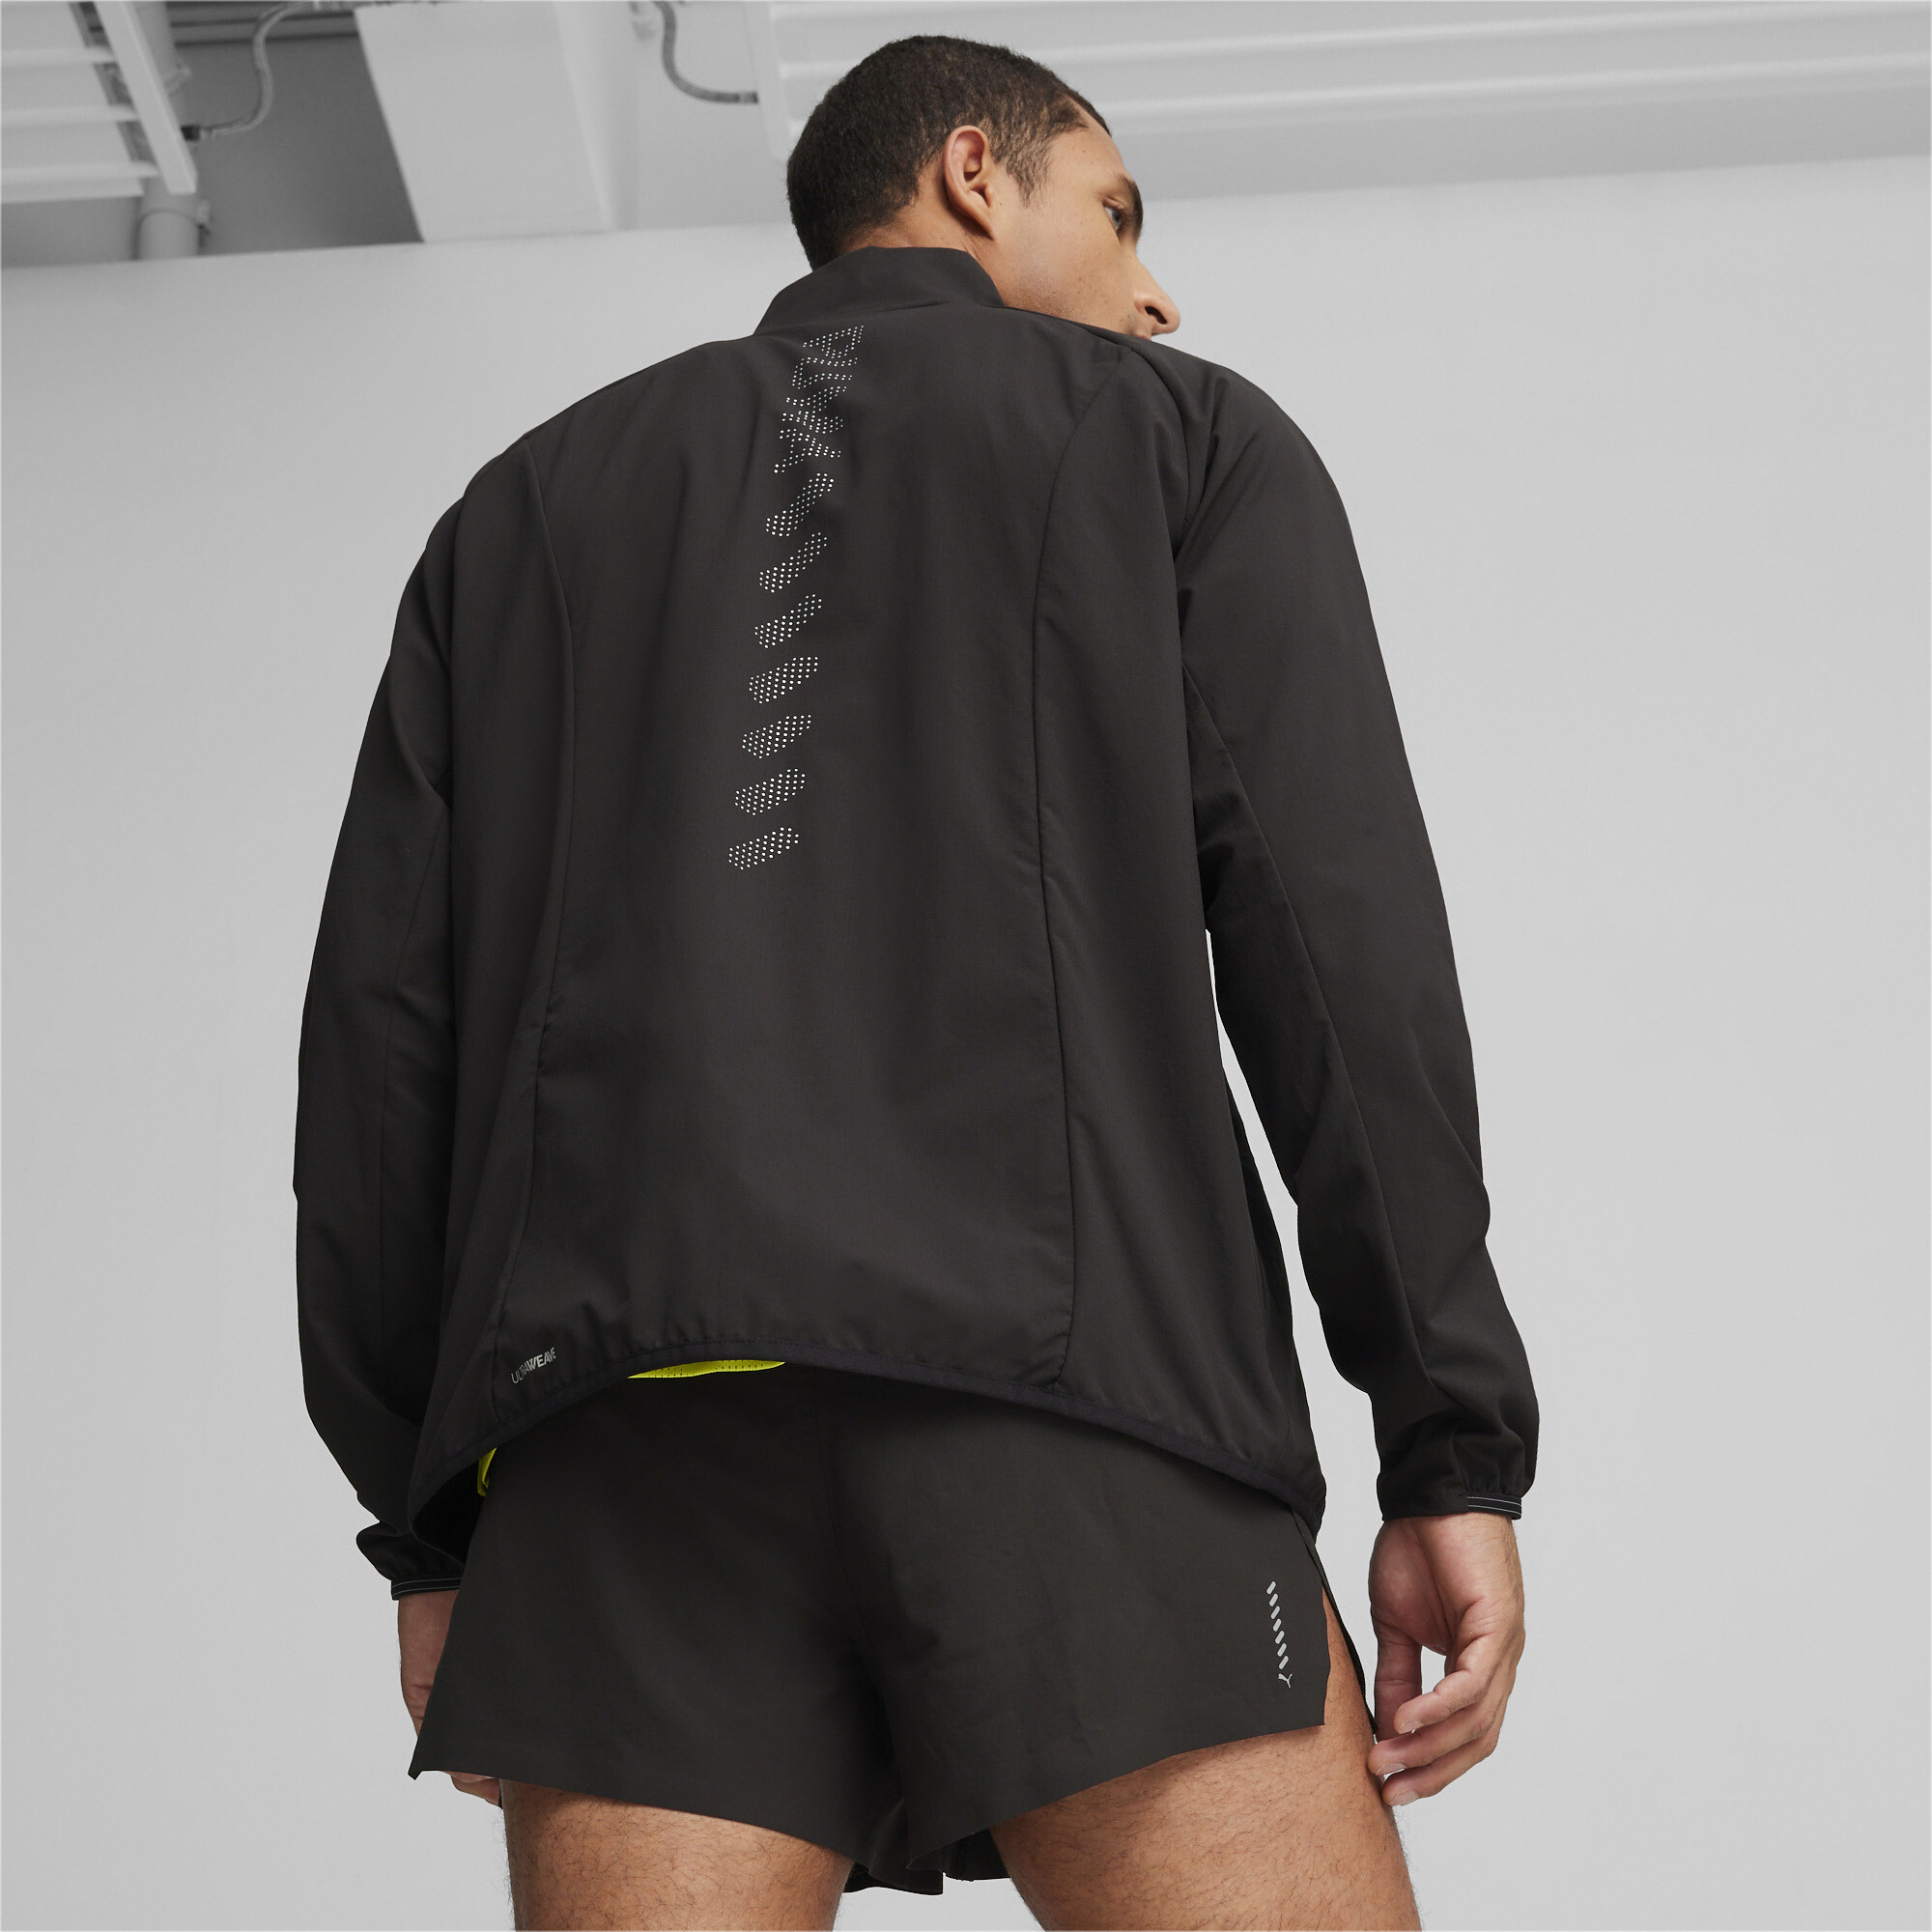 Men's PUMA RUN Elite Jacket In Black, Size 2XL